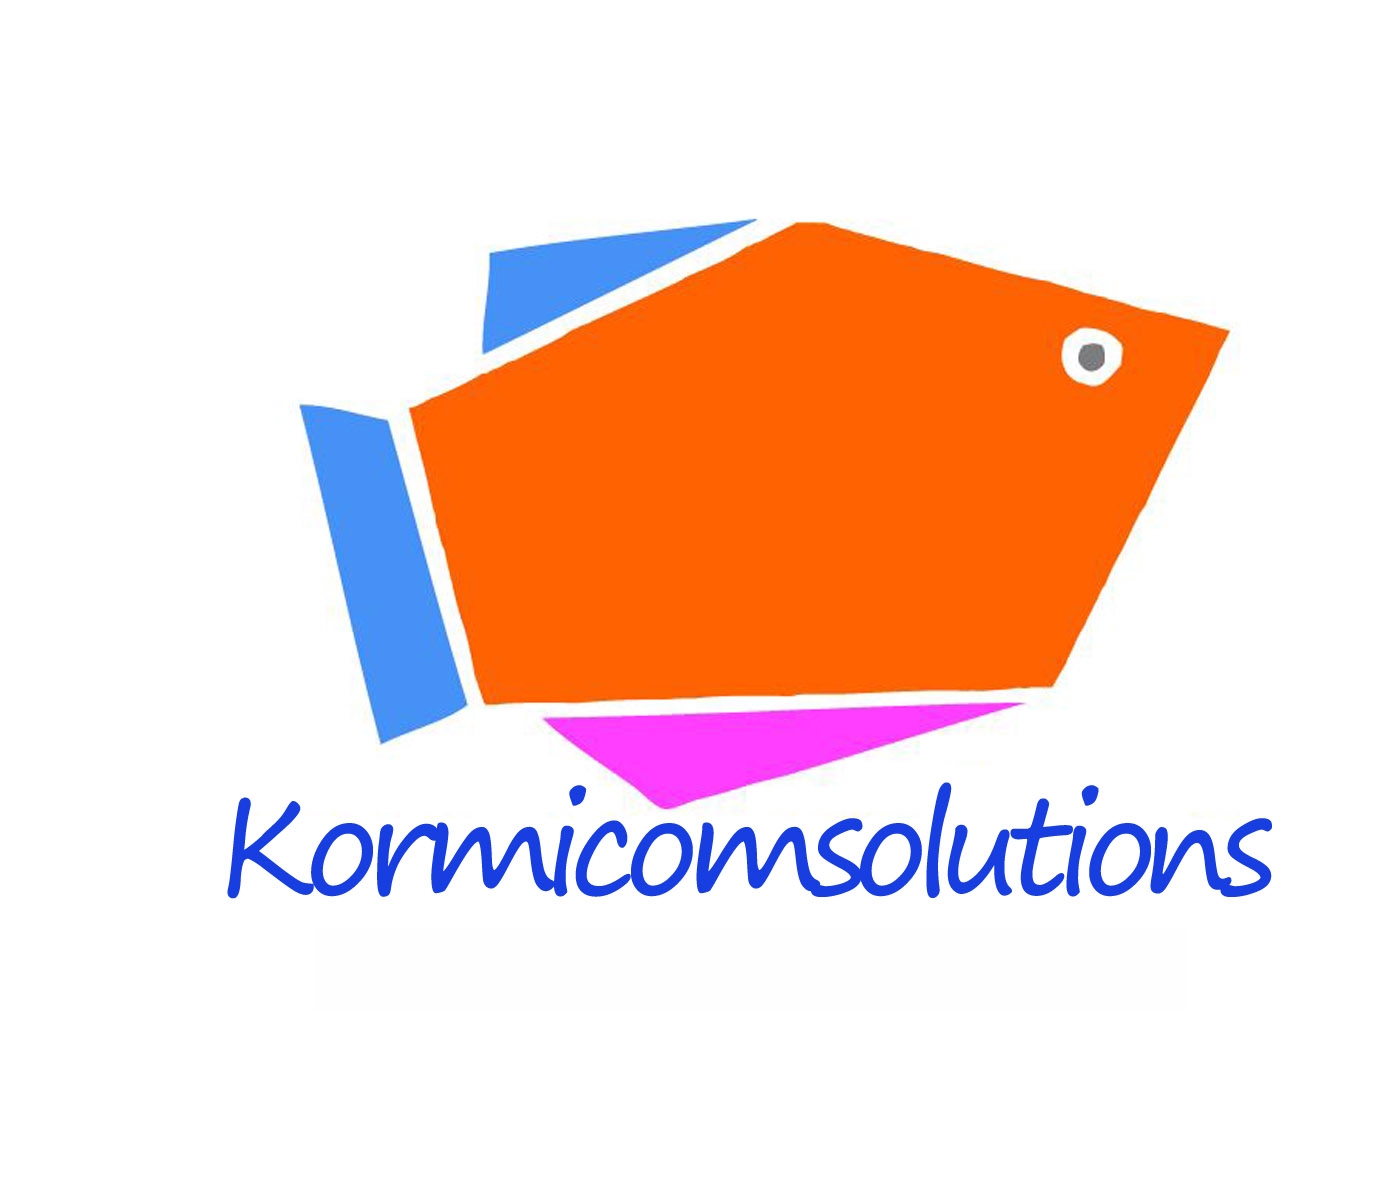 Kormicomsolutions